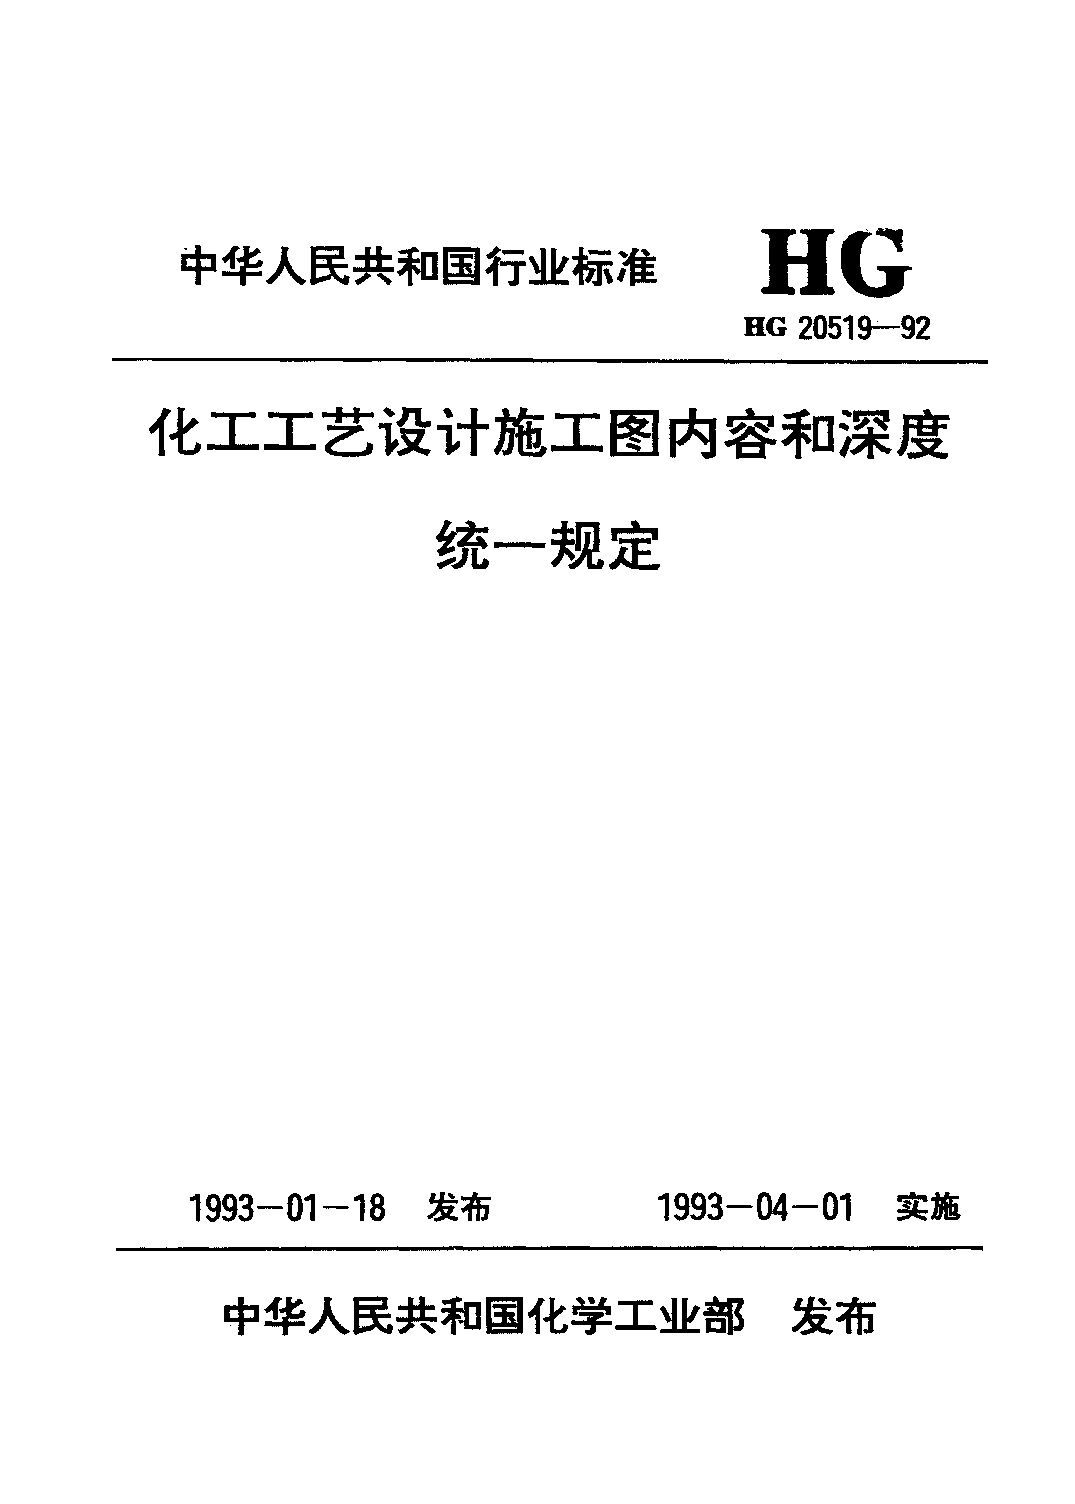 HG 20519.15-1992